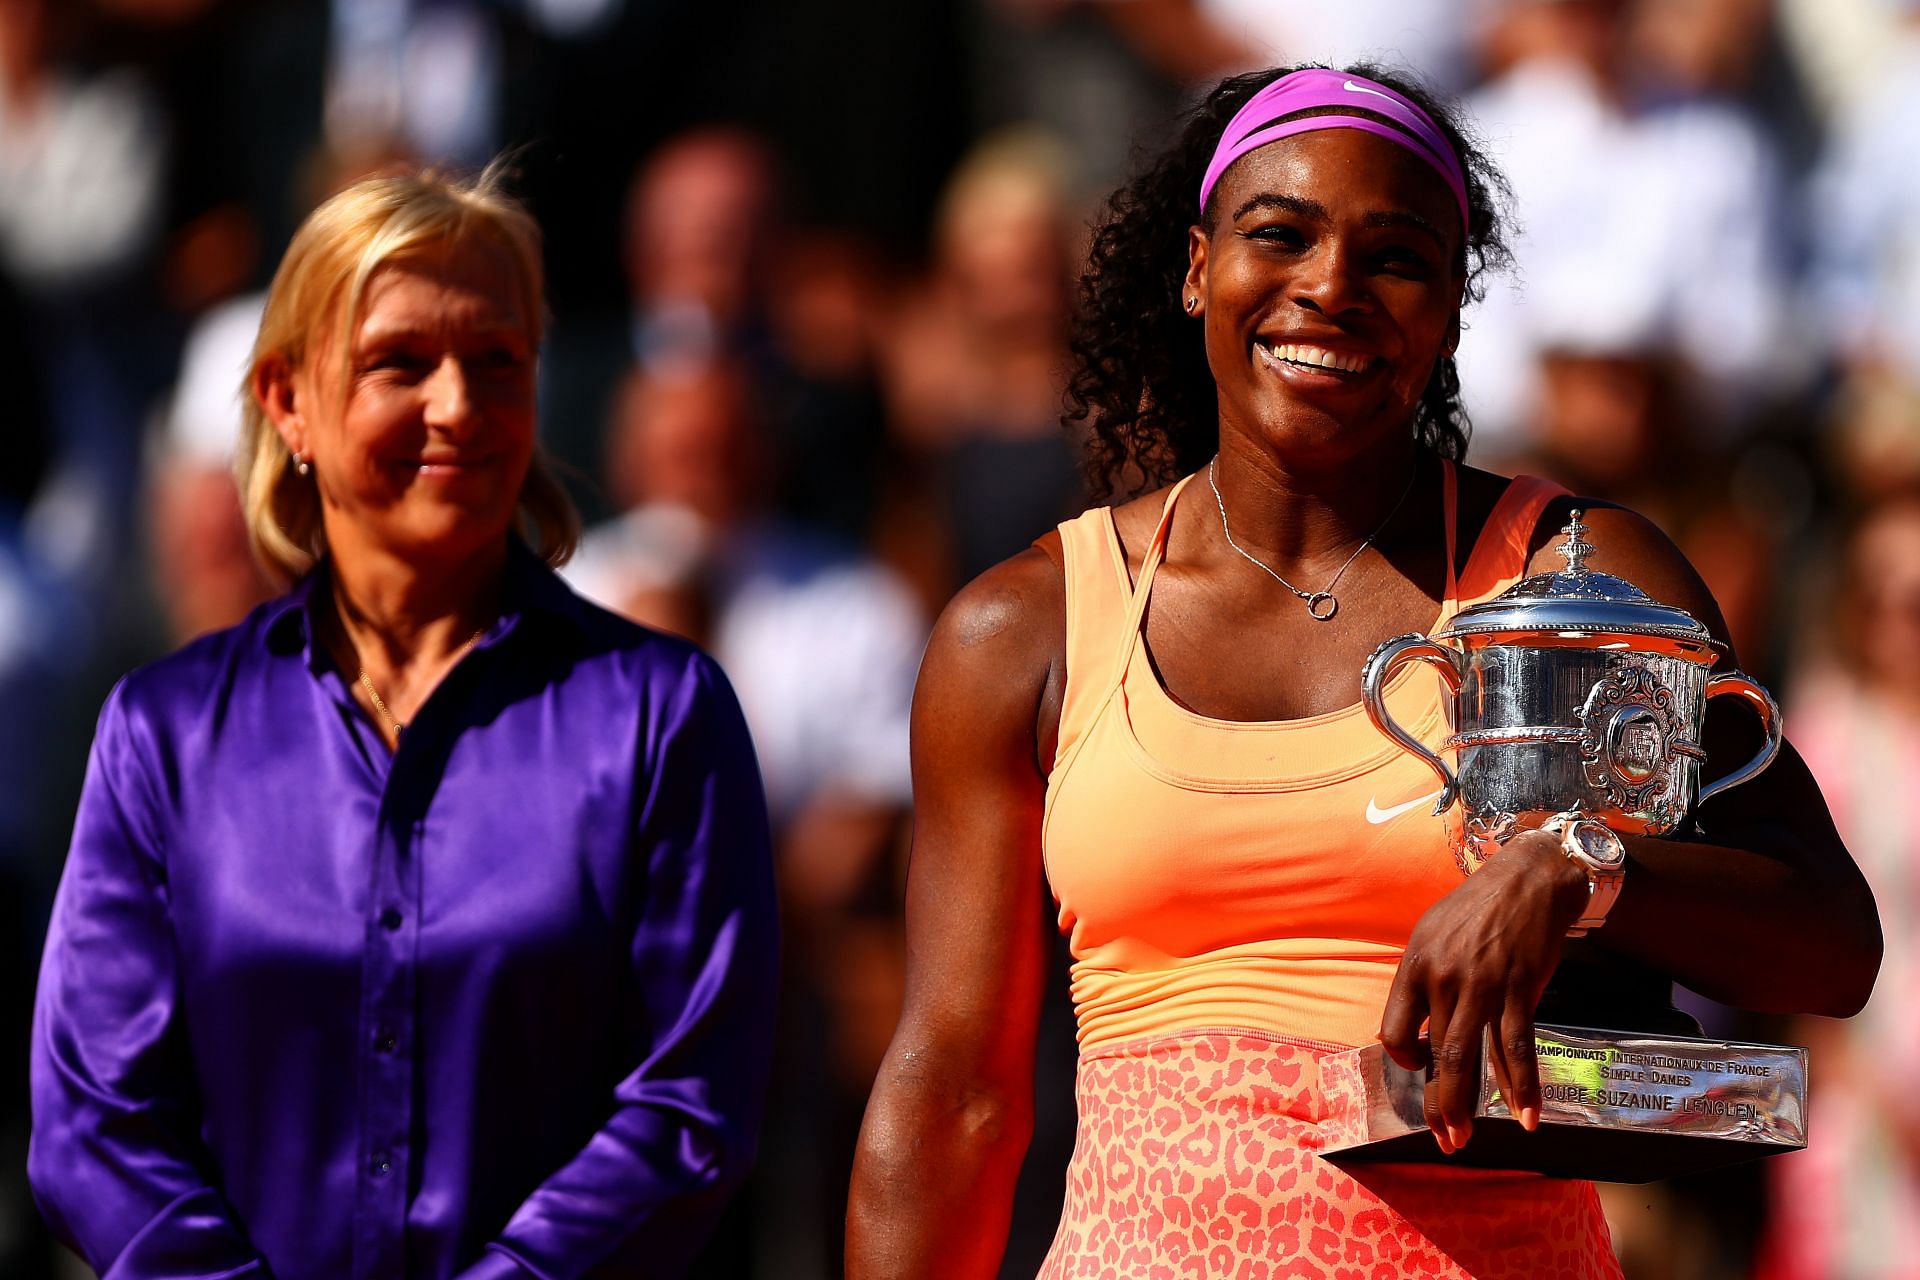 Serena Williams and Martina Navratilova at the 2015 French Open